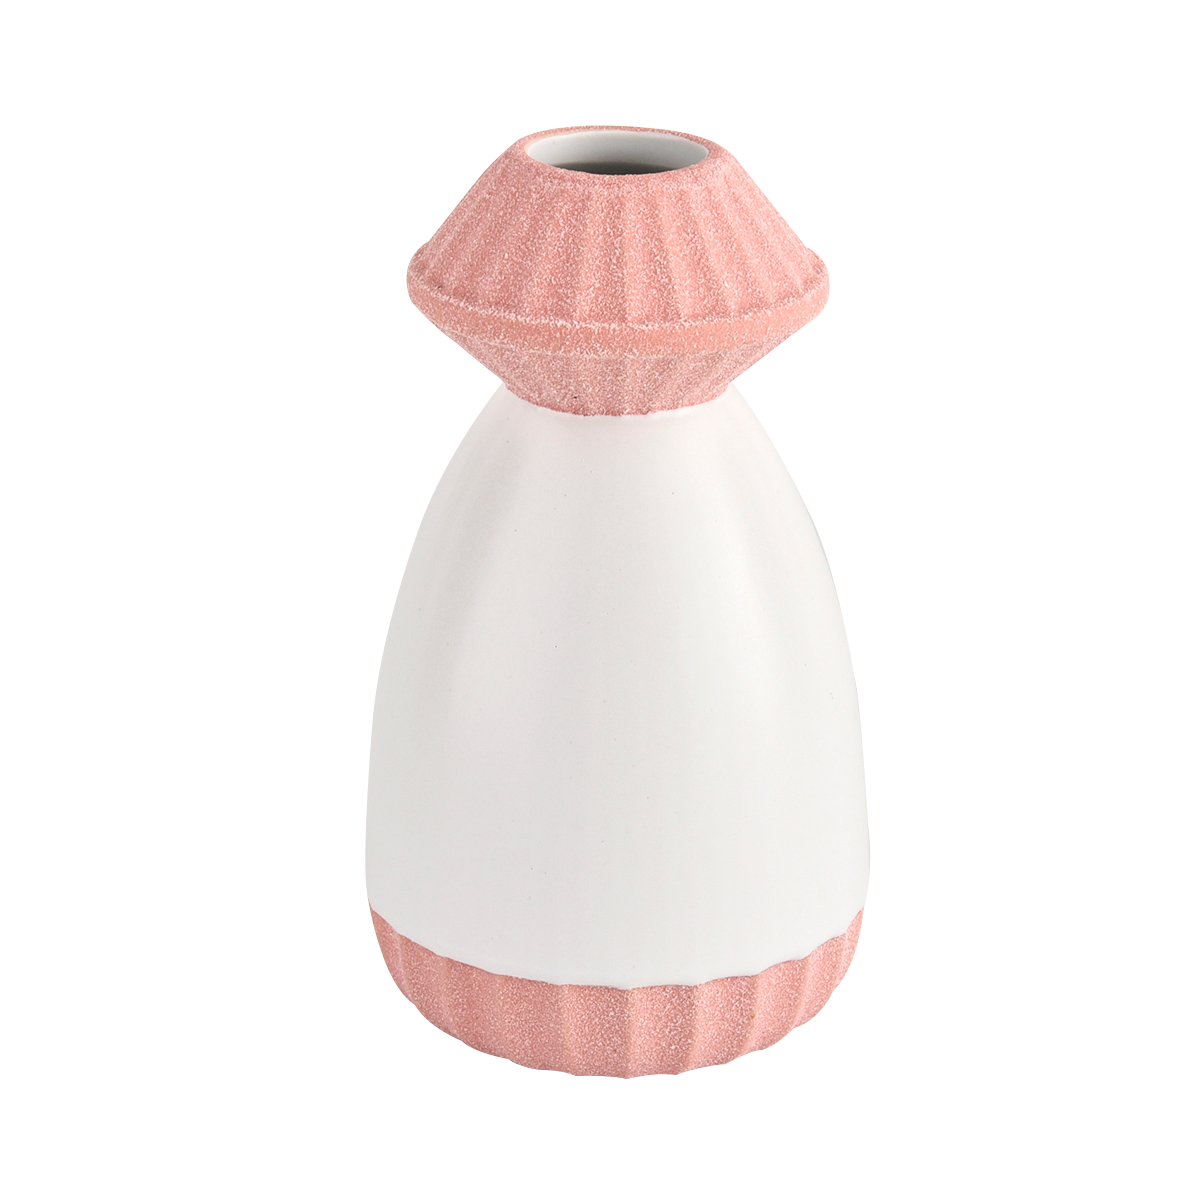 Luxury Air Freshener Perfume Ceramic Diffuser Bottles